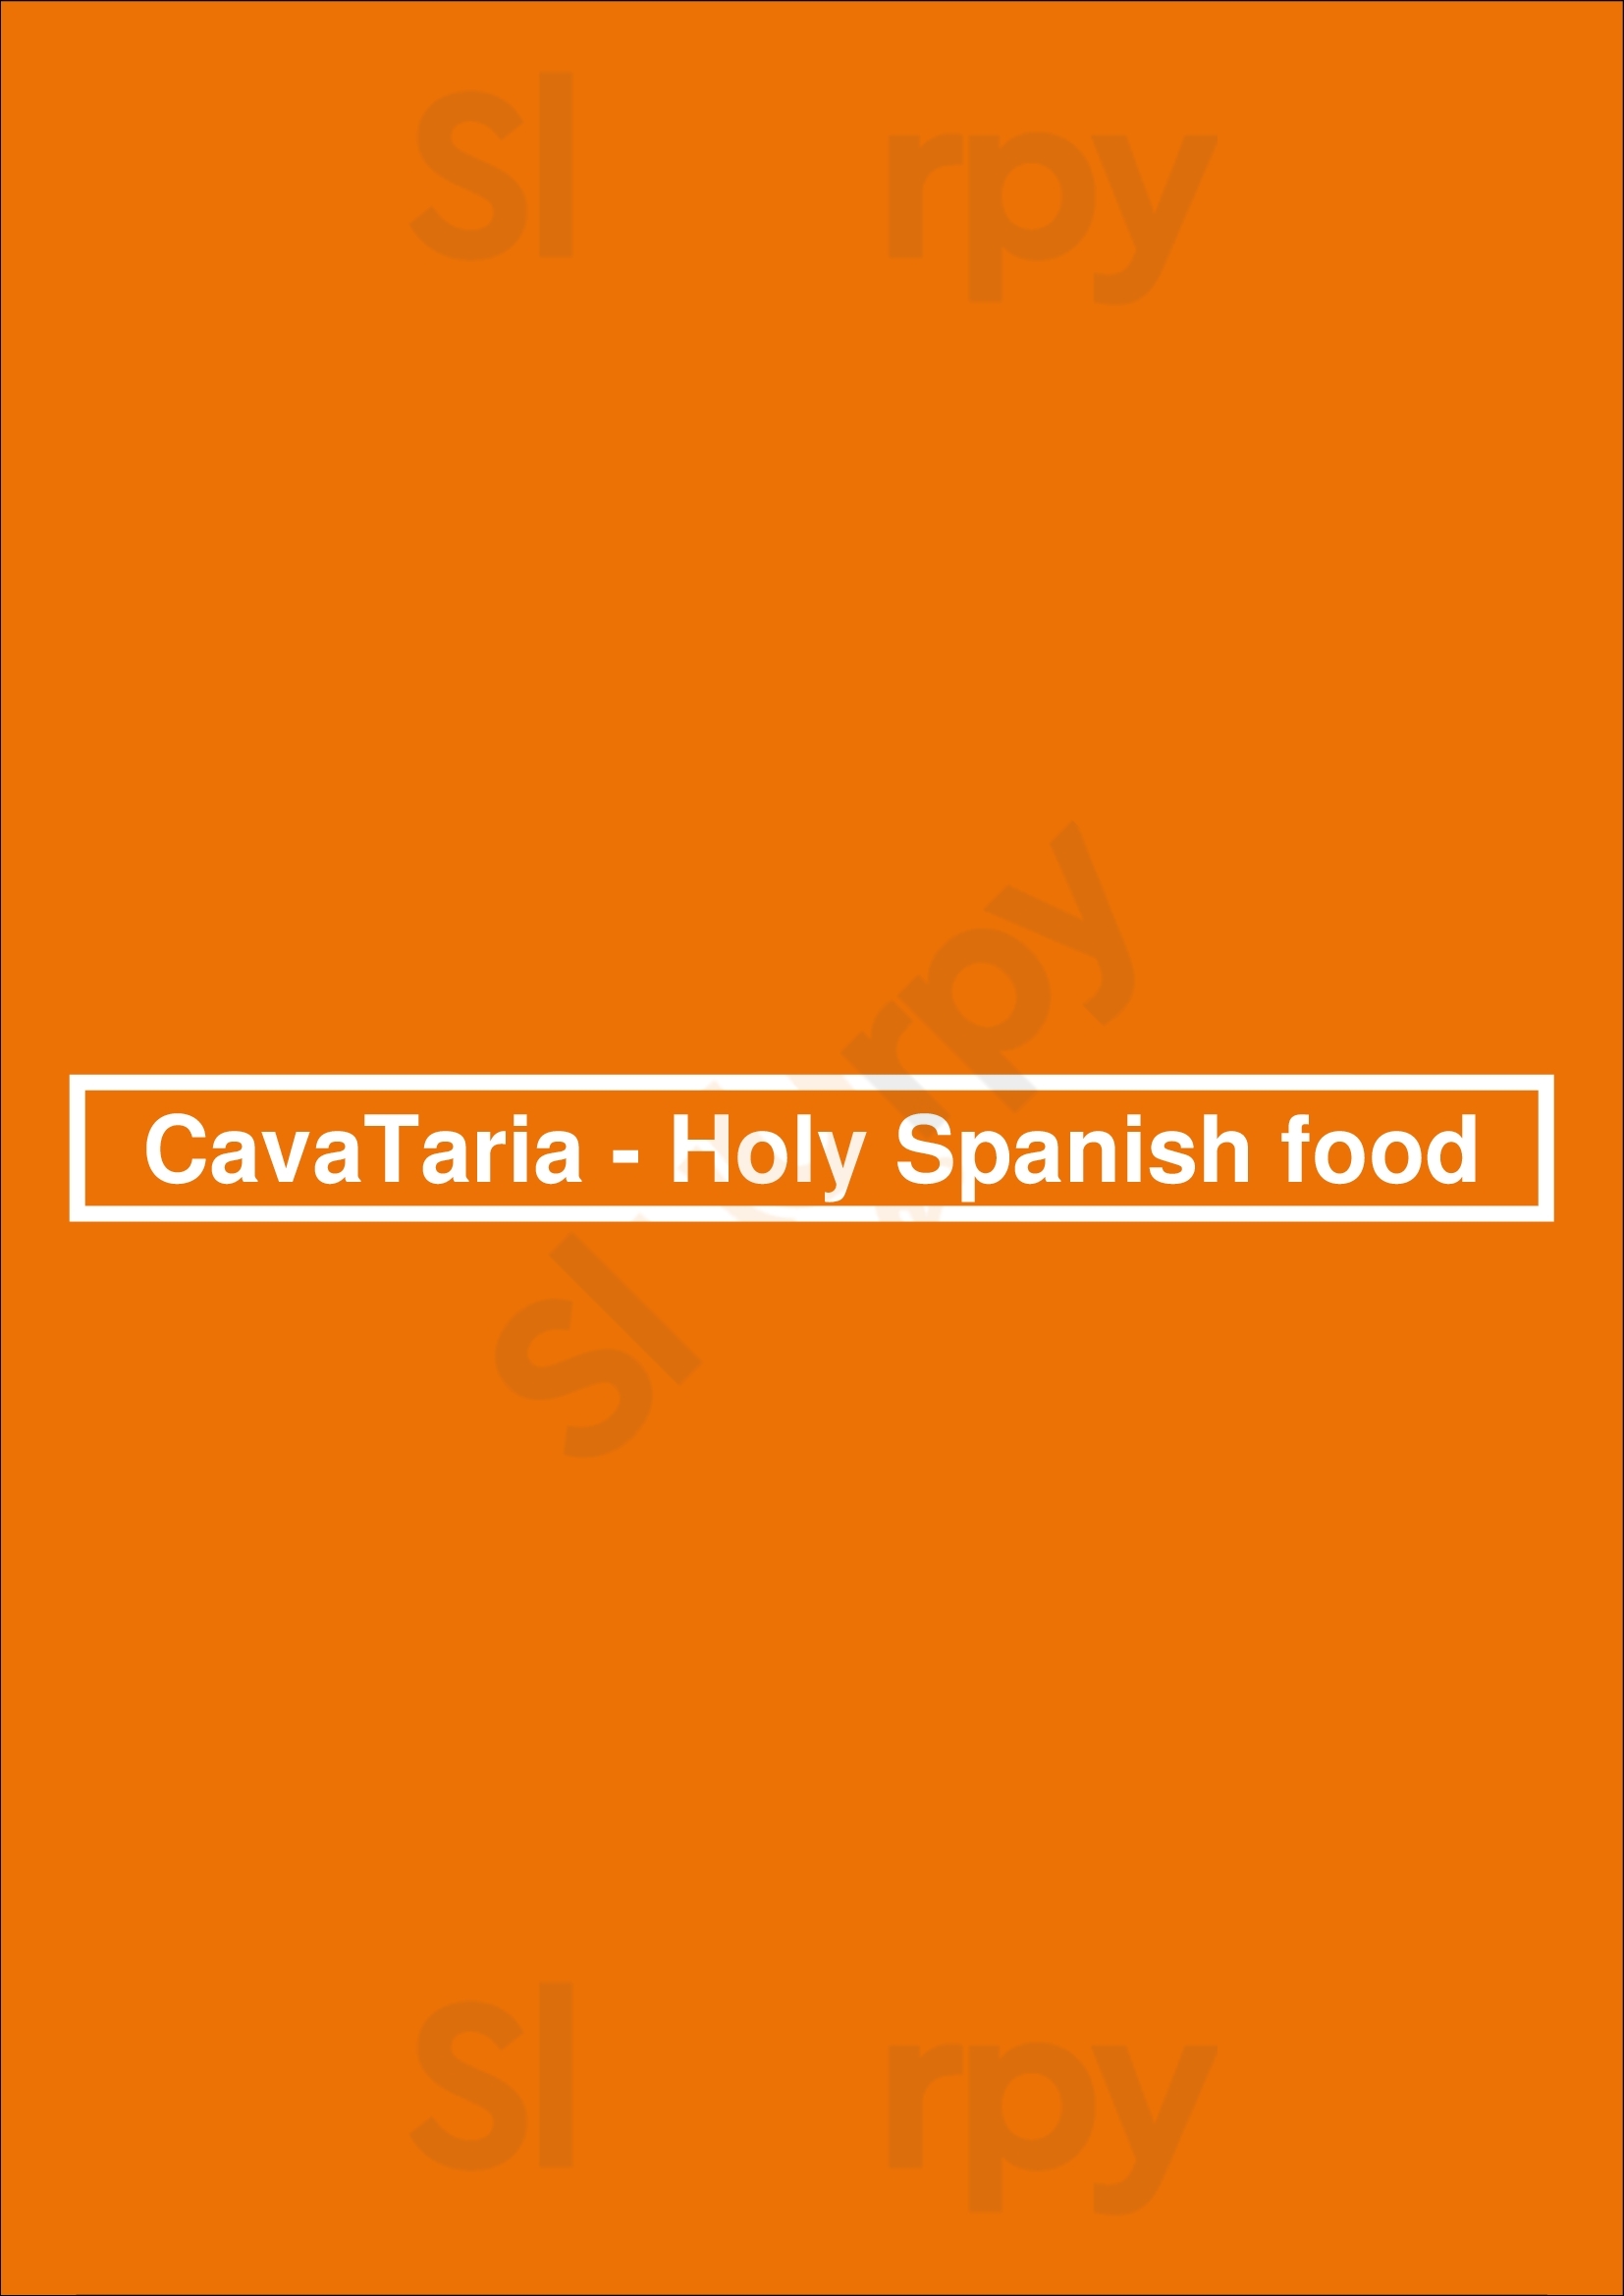 Cavataria - Holy Spanish Food Amsterdam Menu - 1